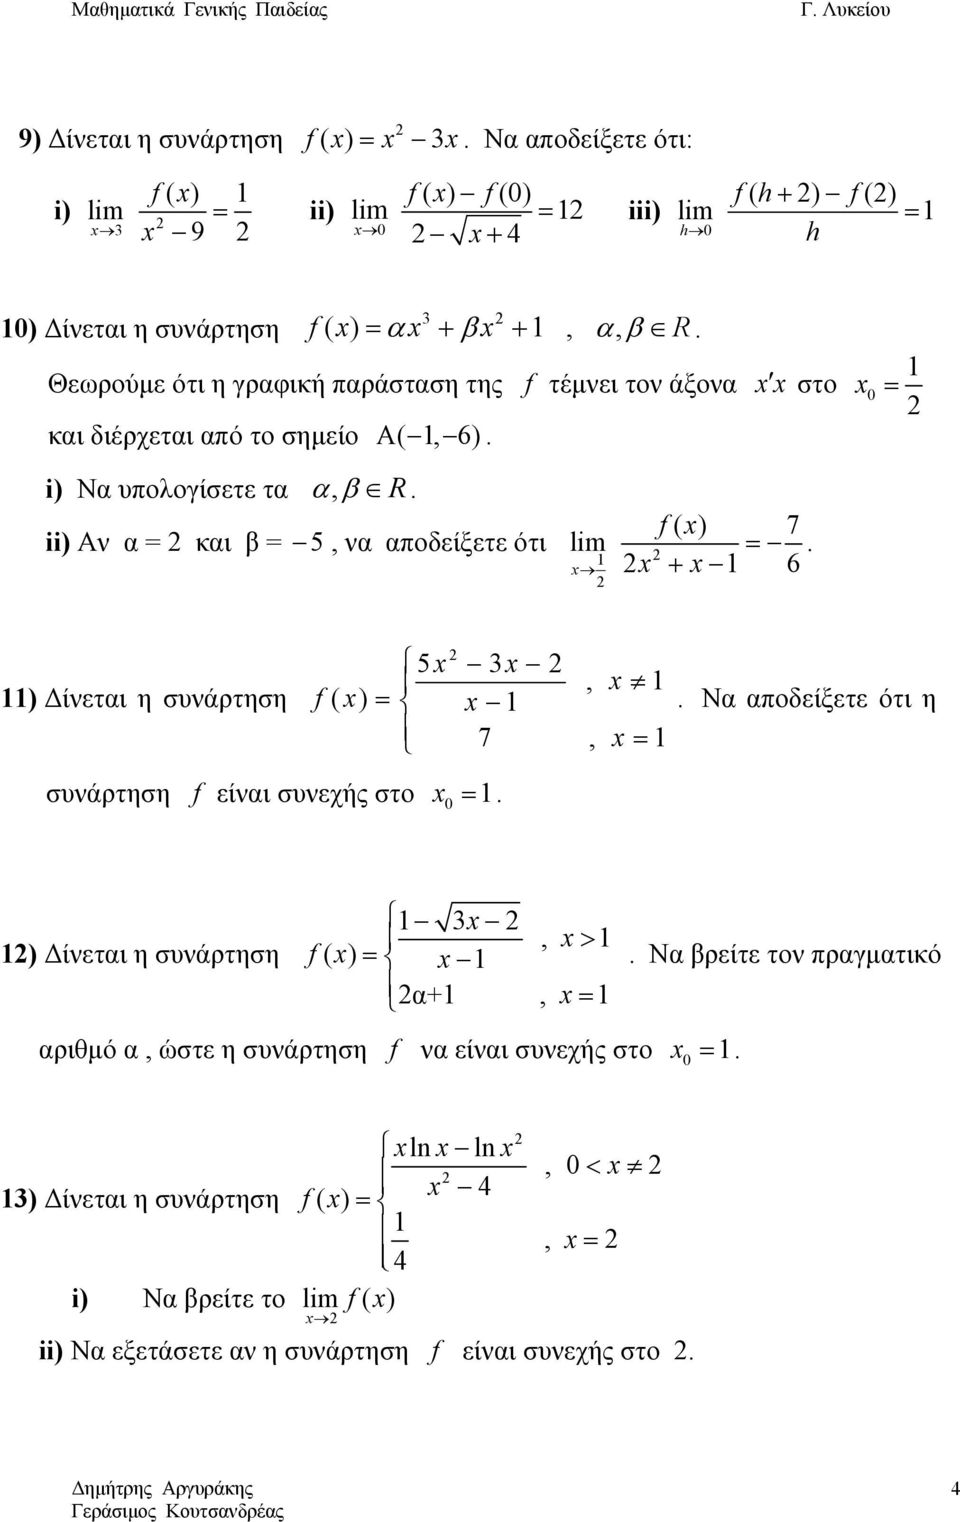 ii) Αν α και β 5, να αποδείξετε ότι lim ( ) 7 + 6. ) Δίνεται η συνάρτηση 5, ( ) 7, συνάρτηση είναι συνεχής στο 0.